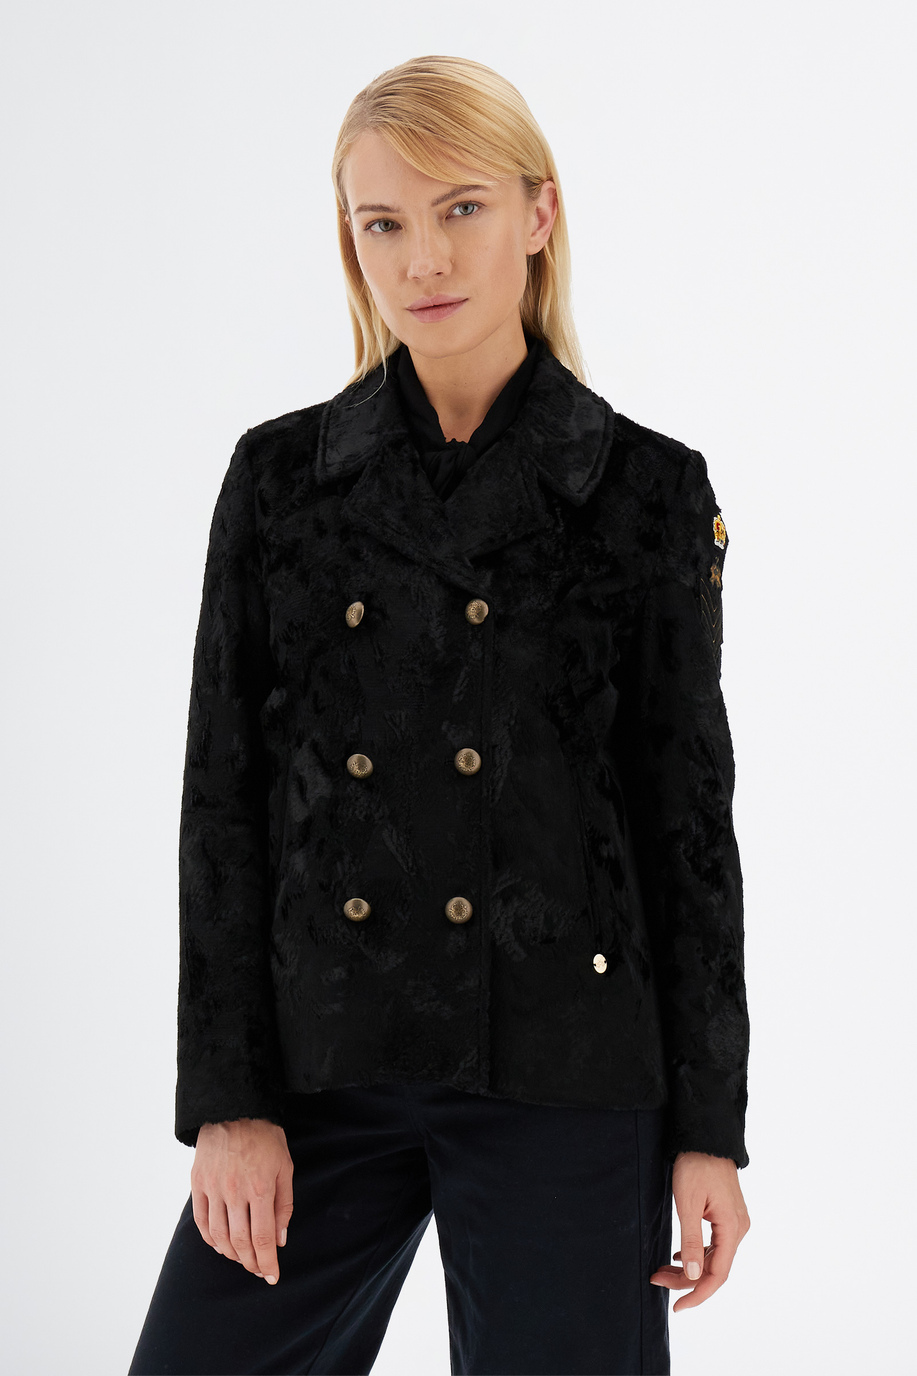 Giacca donna a maniche lunghe England con pelliccia - Look eleganti per lei | La Martina - Official Online Shop